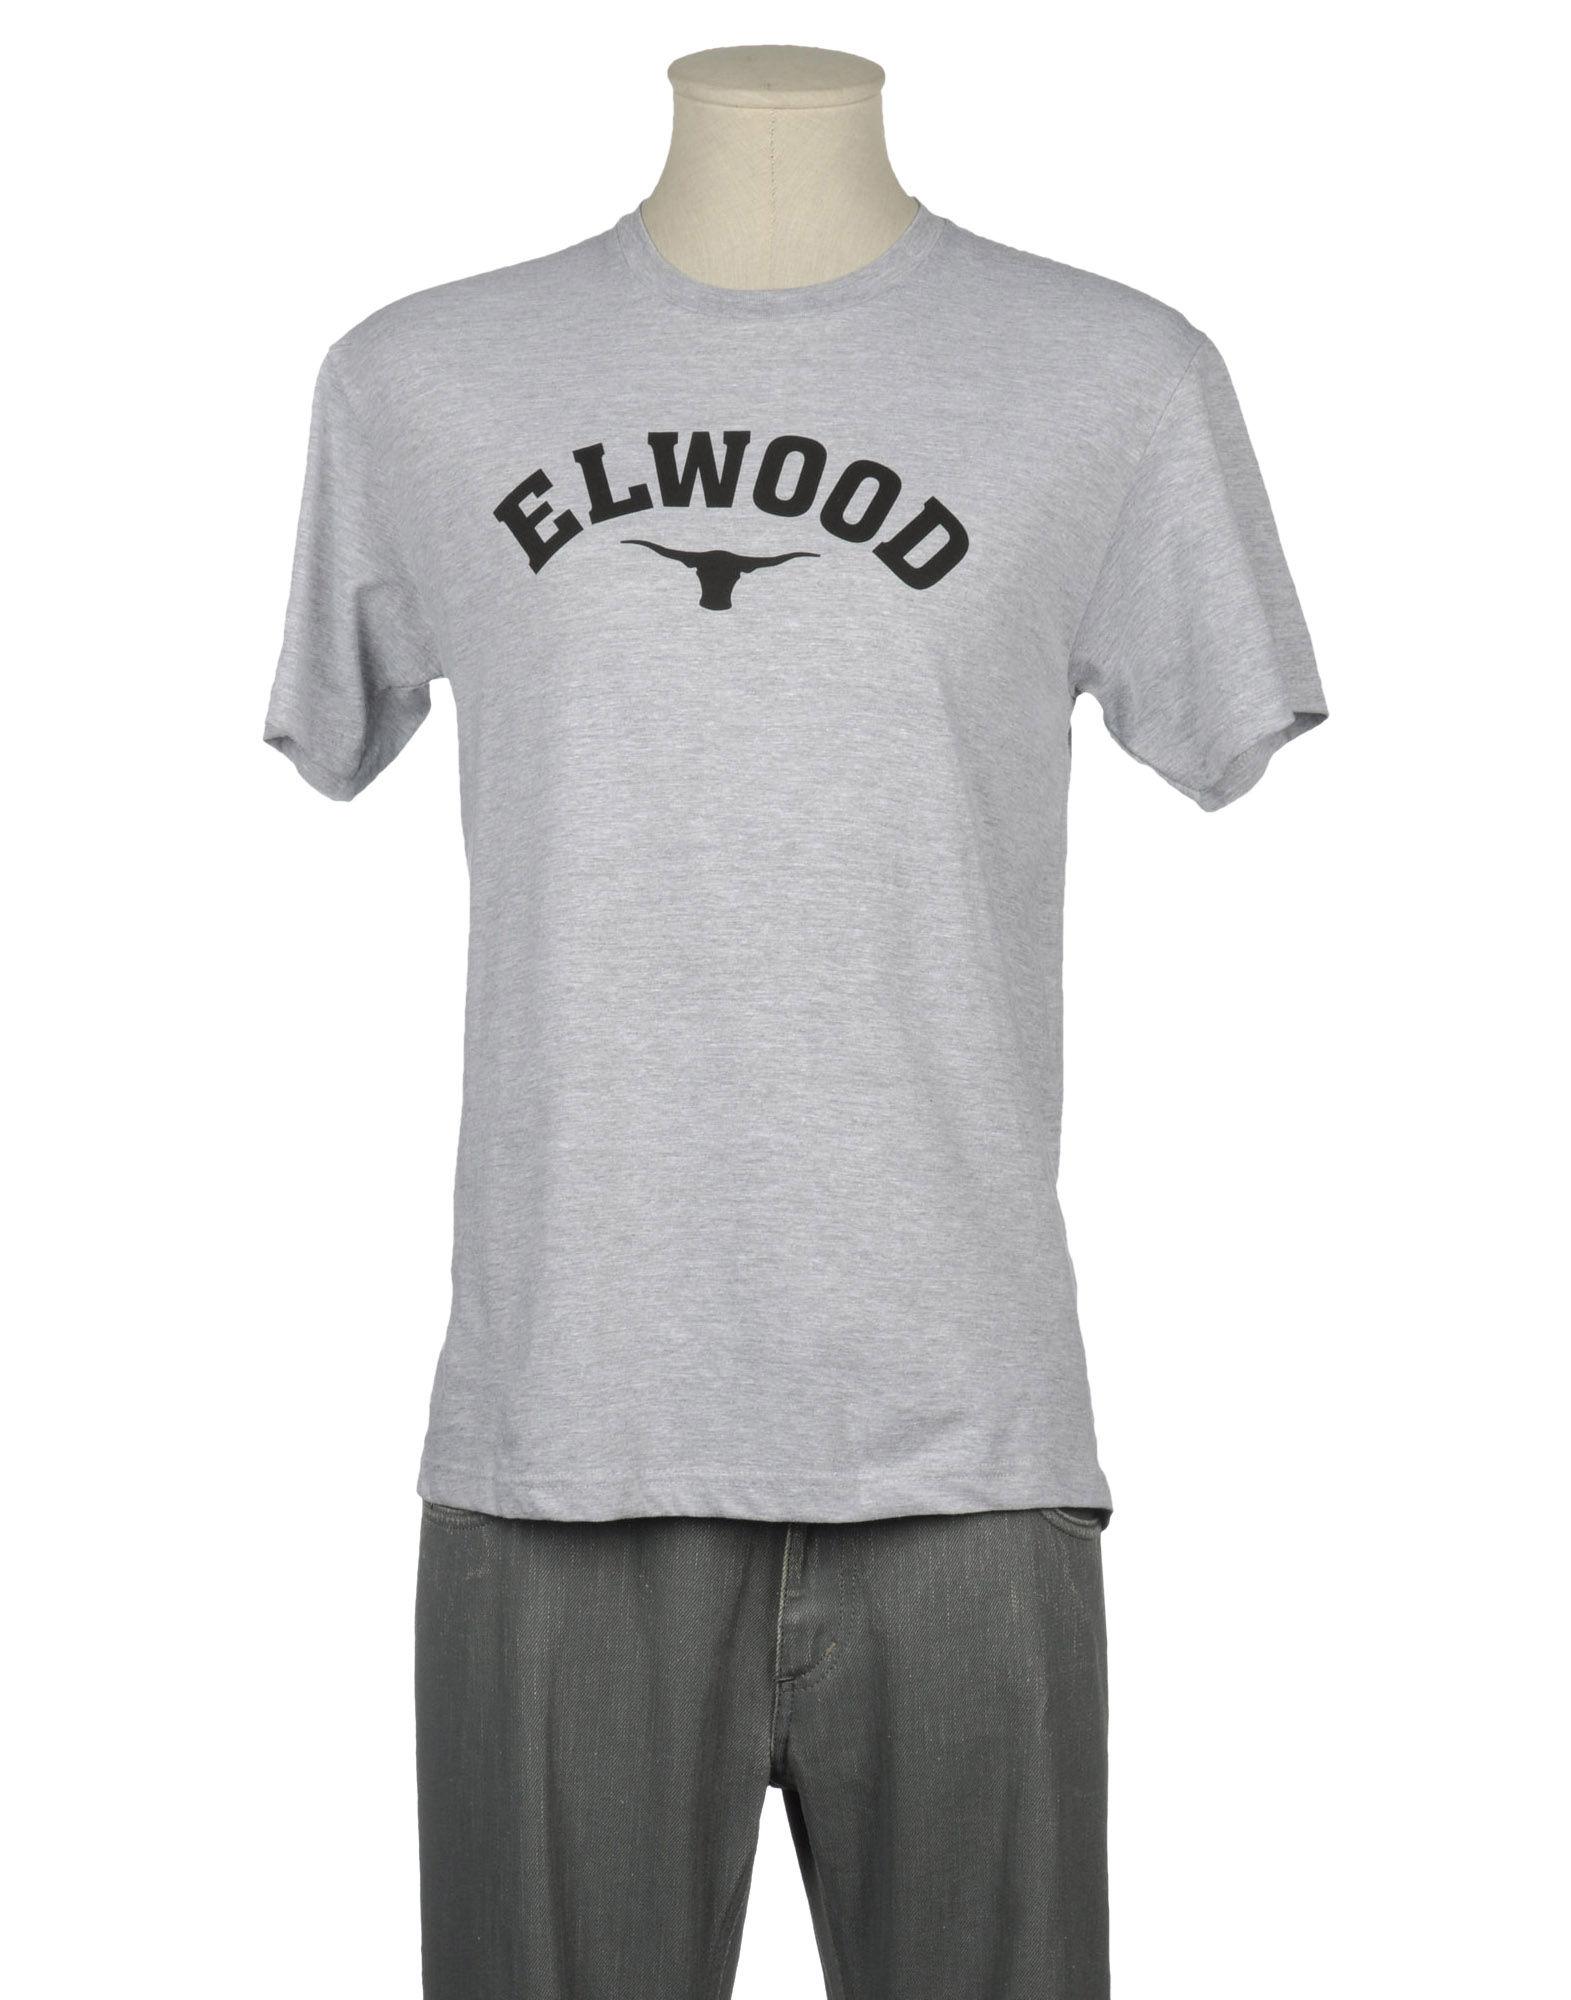 Foto elwood camisetas de manga corta Hombre Gris perla foto 578997